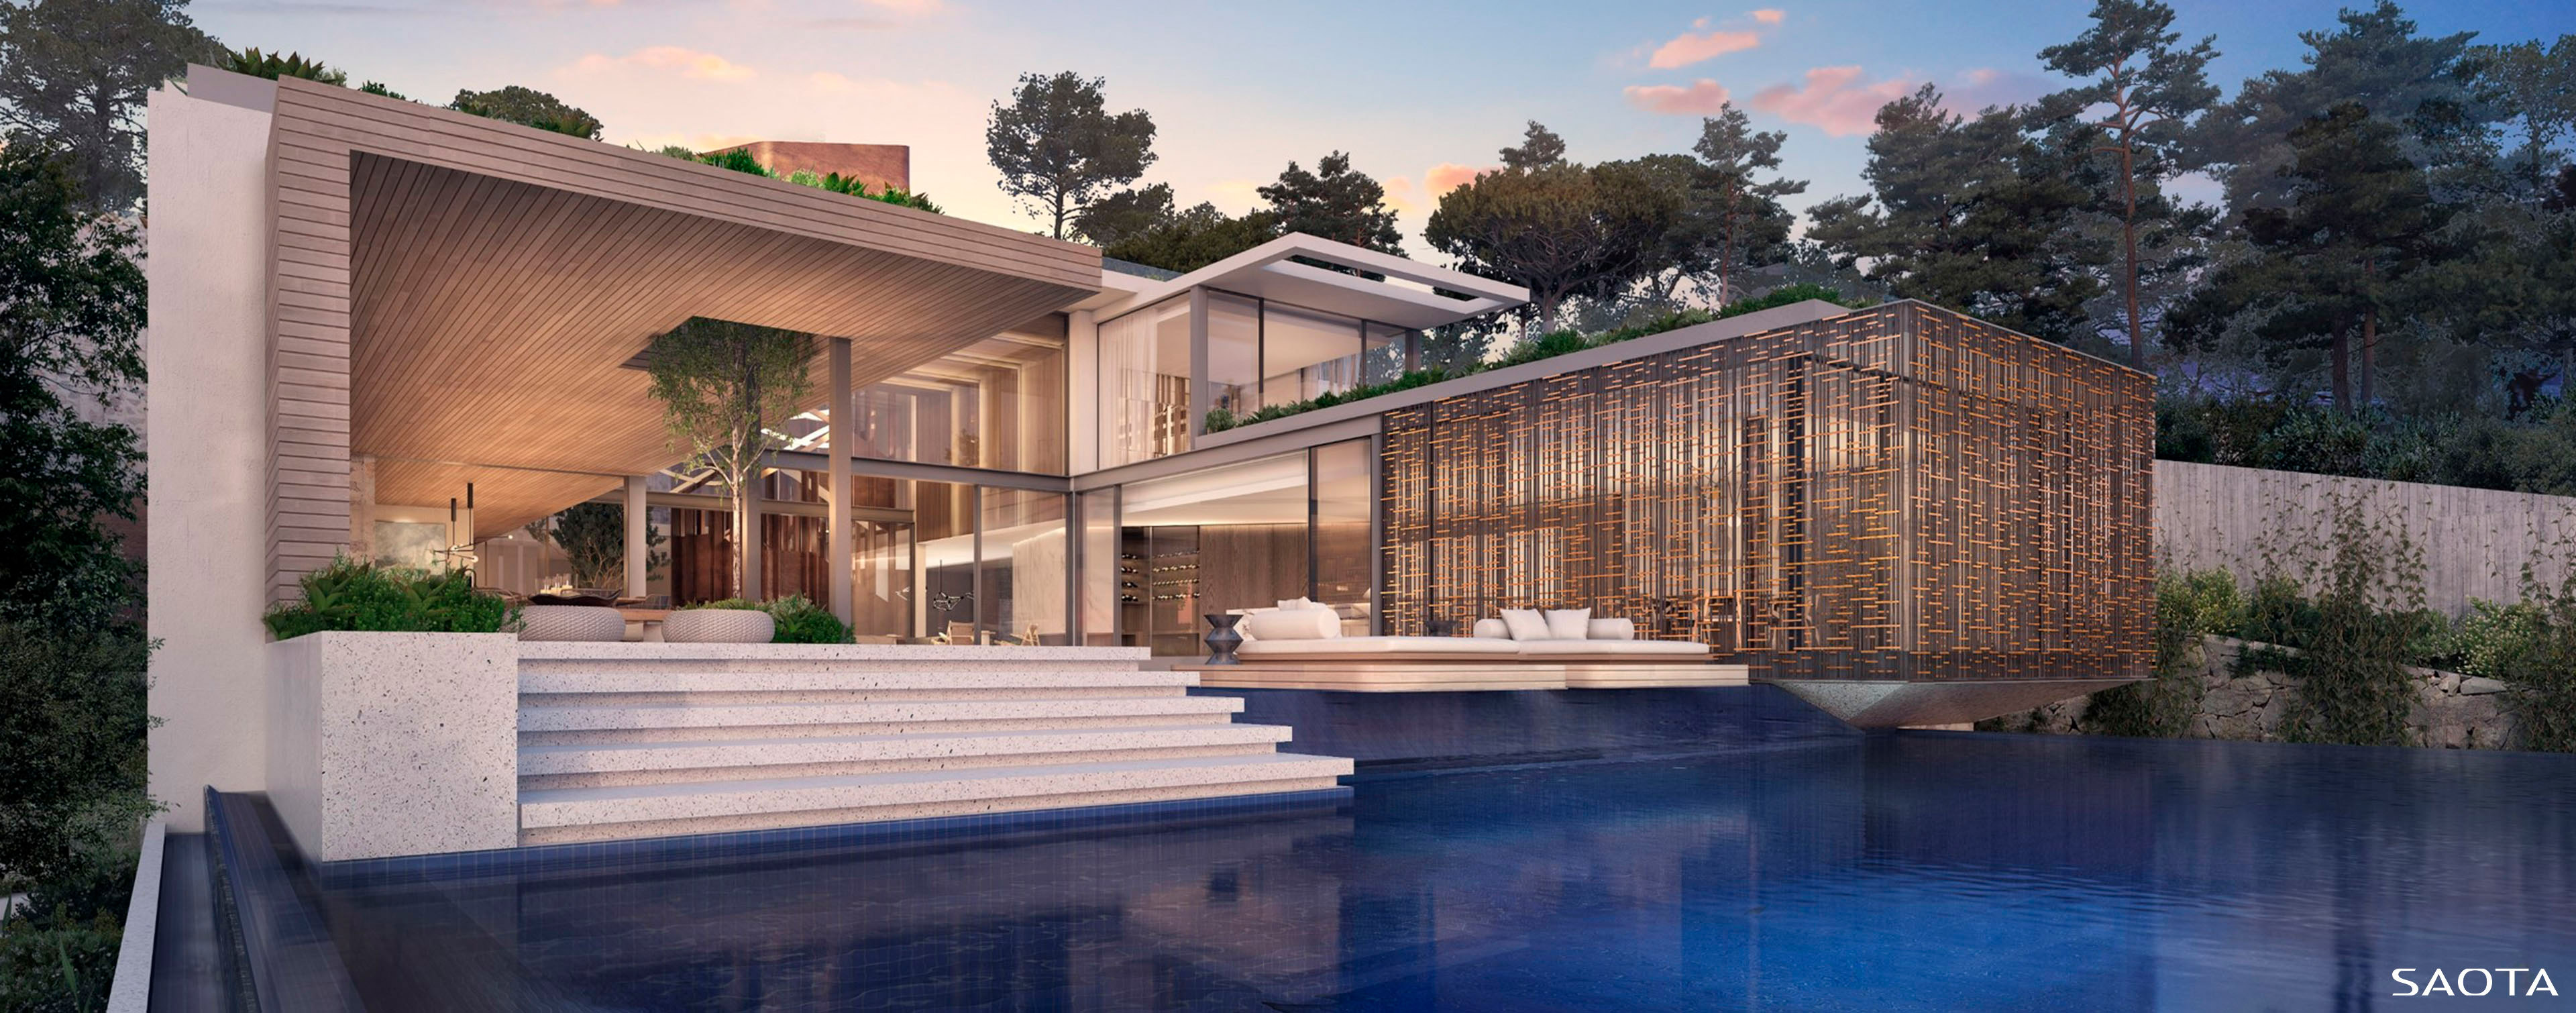 luv studio luxury architects ibiza vistaalegre house IMG 03 - LUV Studio - Architecture & Design - Barcelona